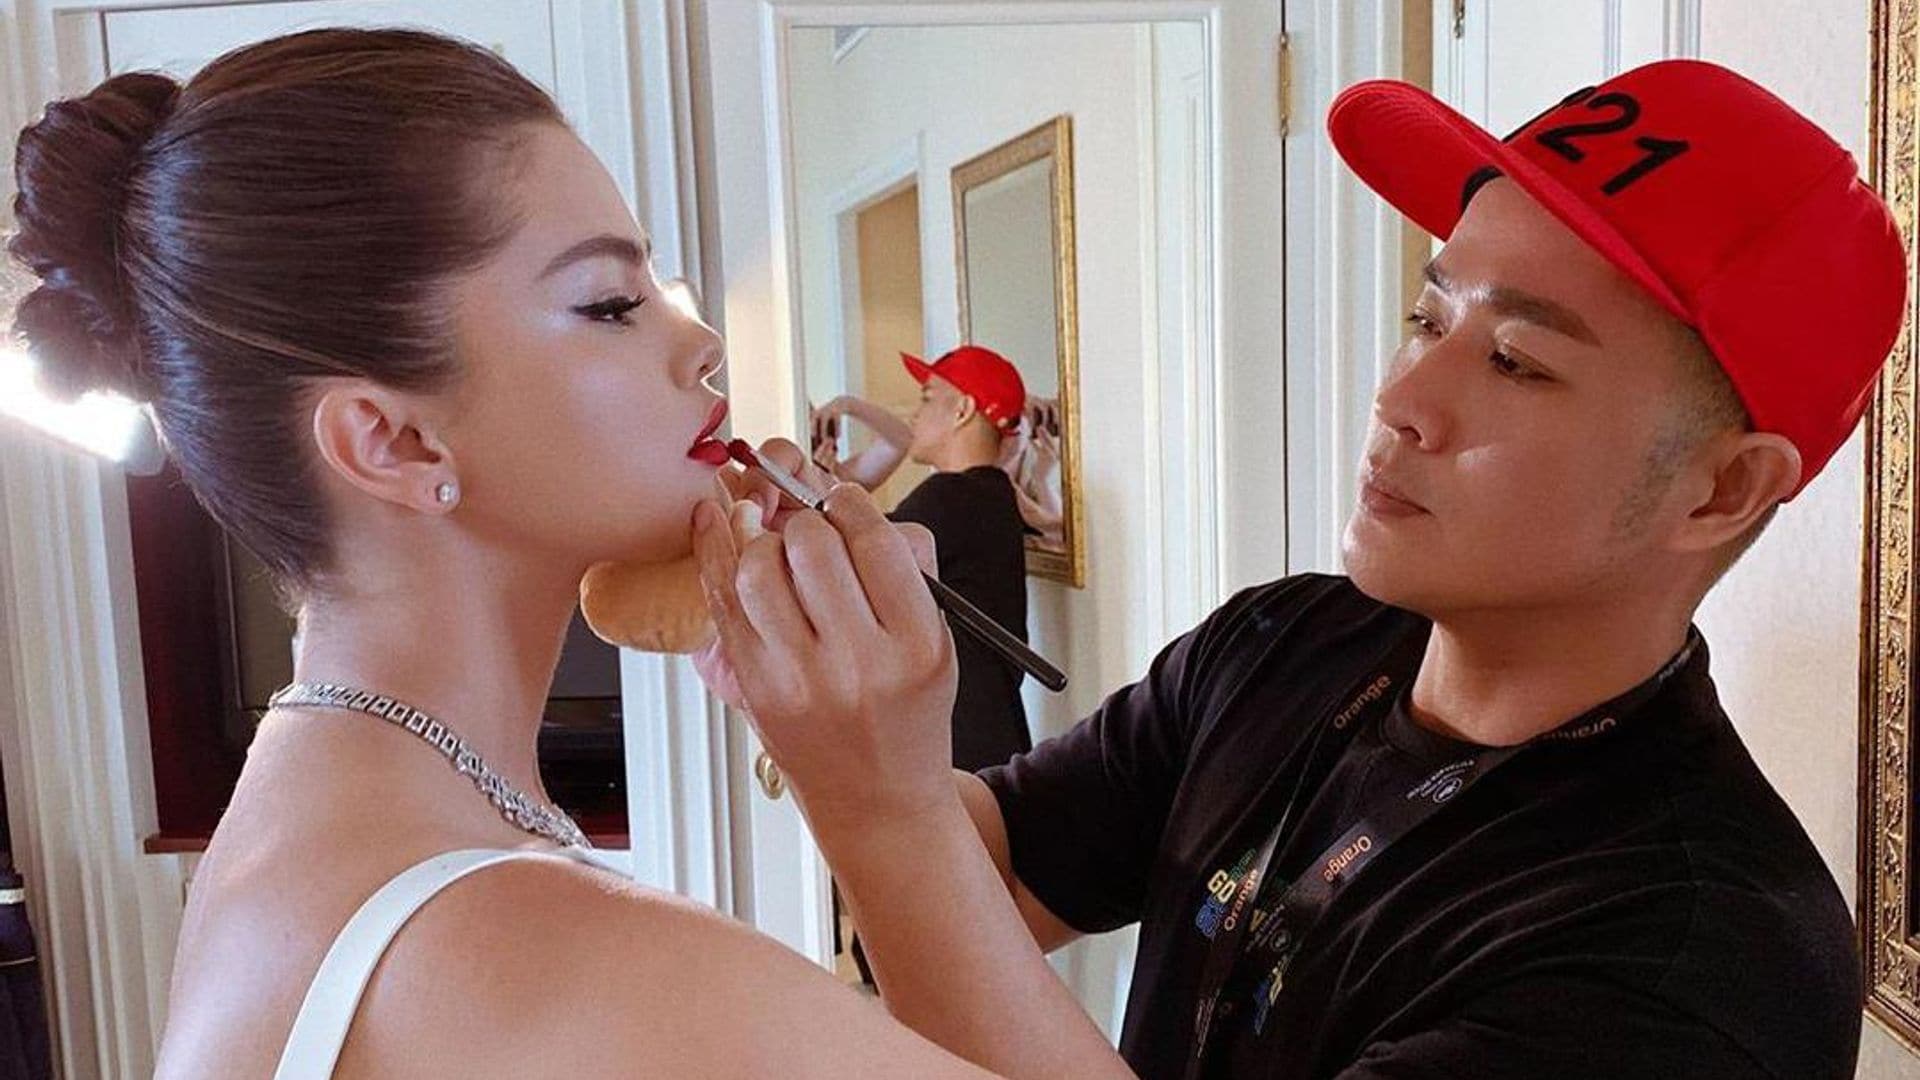 Hung Vanngo is the Vietnamese makeup artist behind Selena Gomez and Penelope Cruz’s glam looks